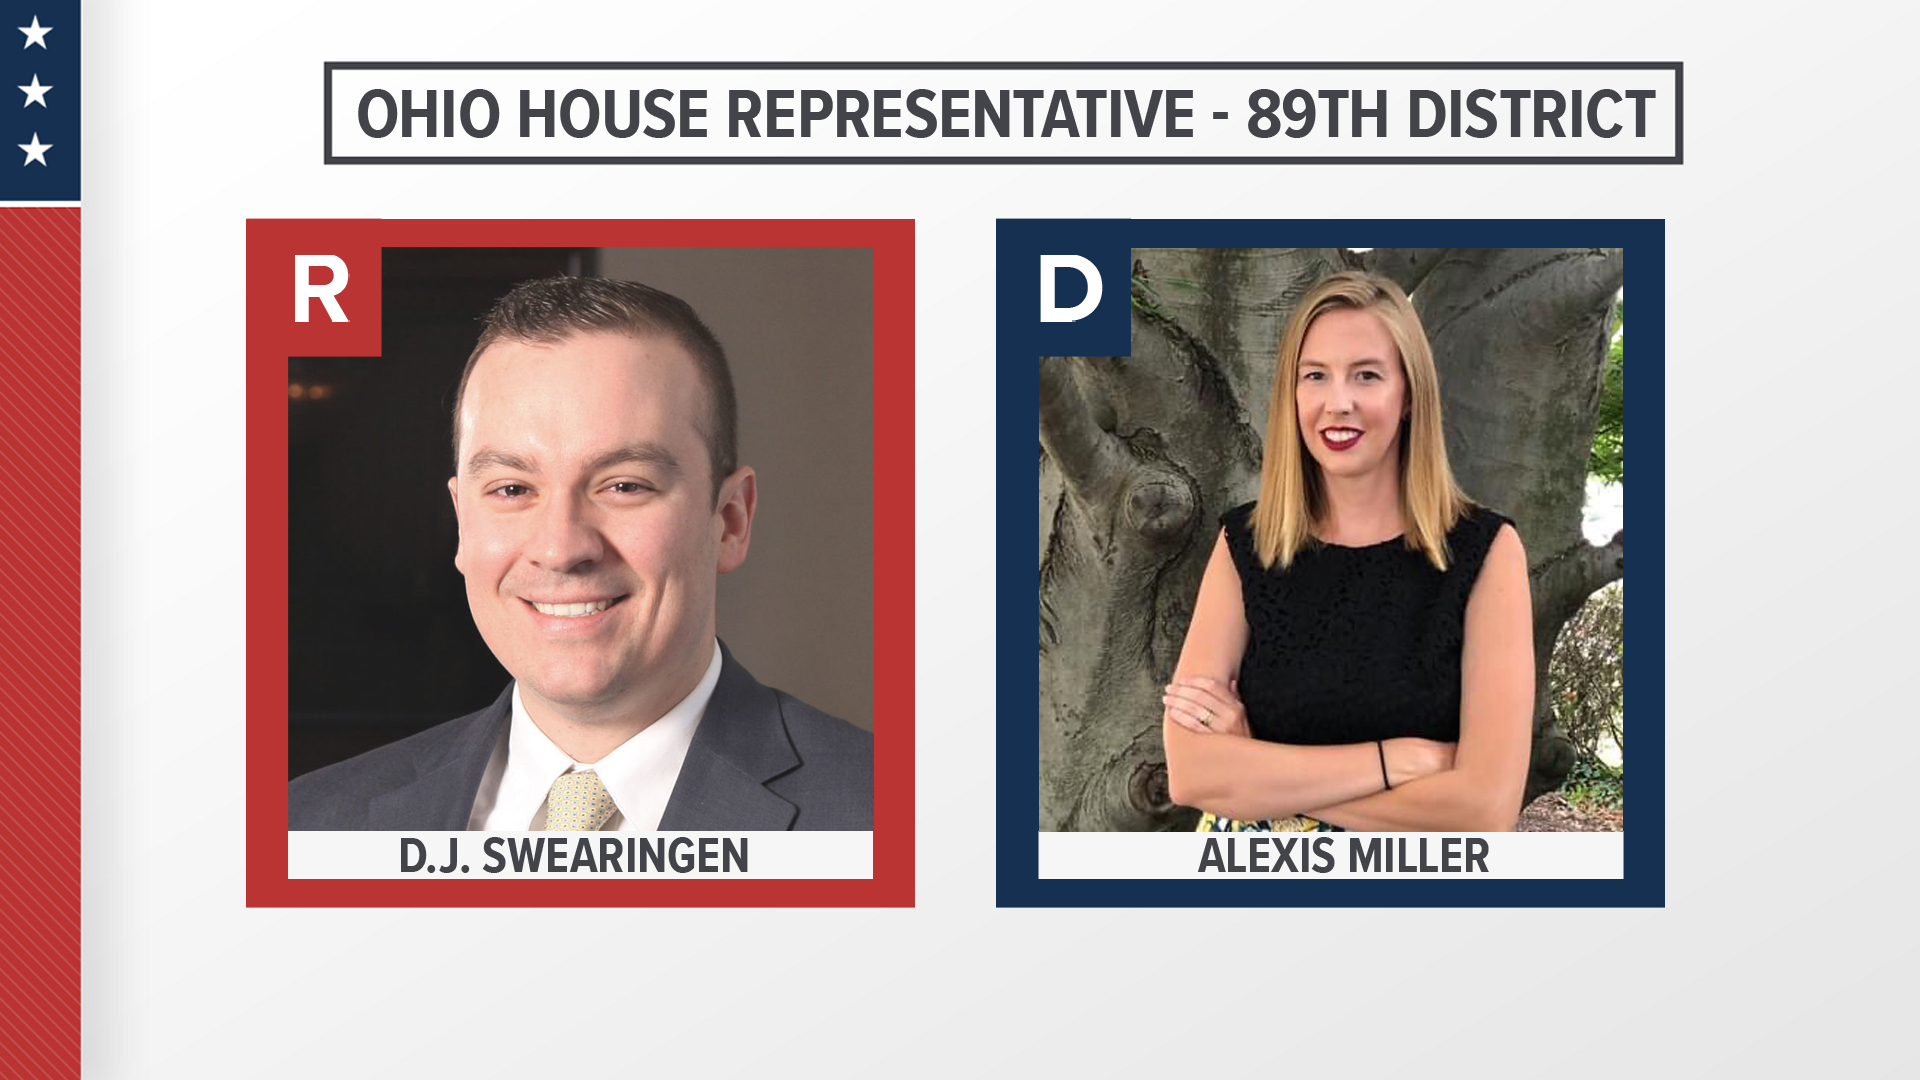 Republican State Rep. D.J. Swearingen is running against Democrat Alexis Miller.